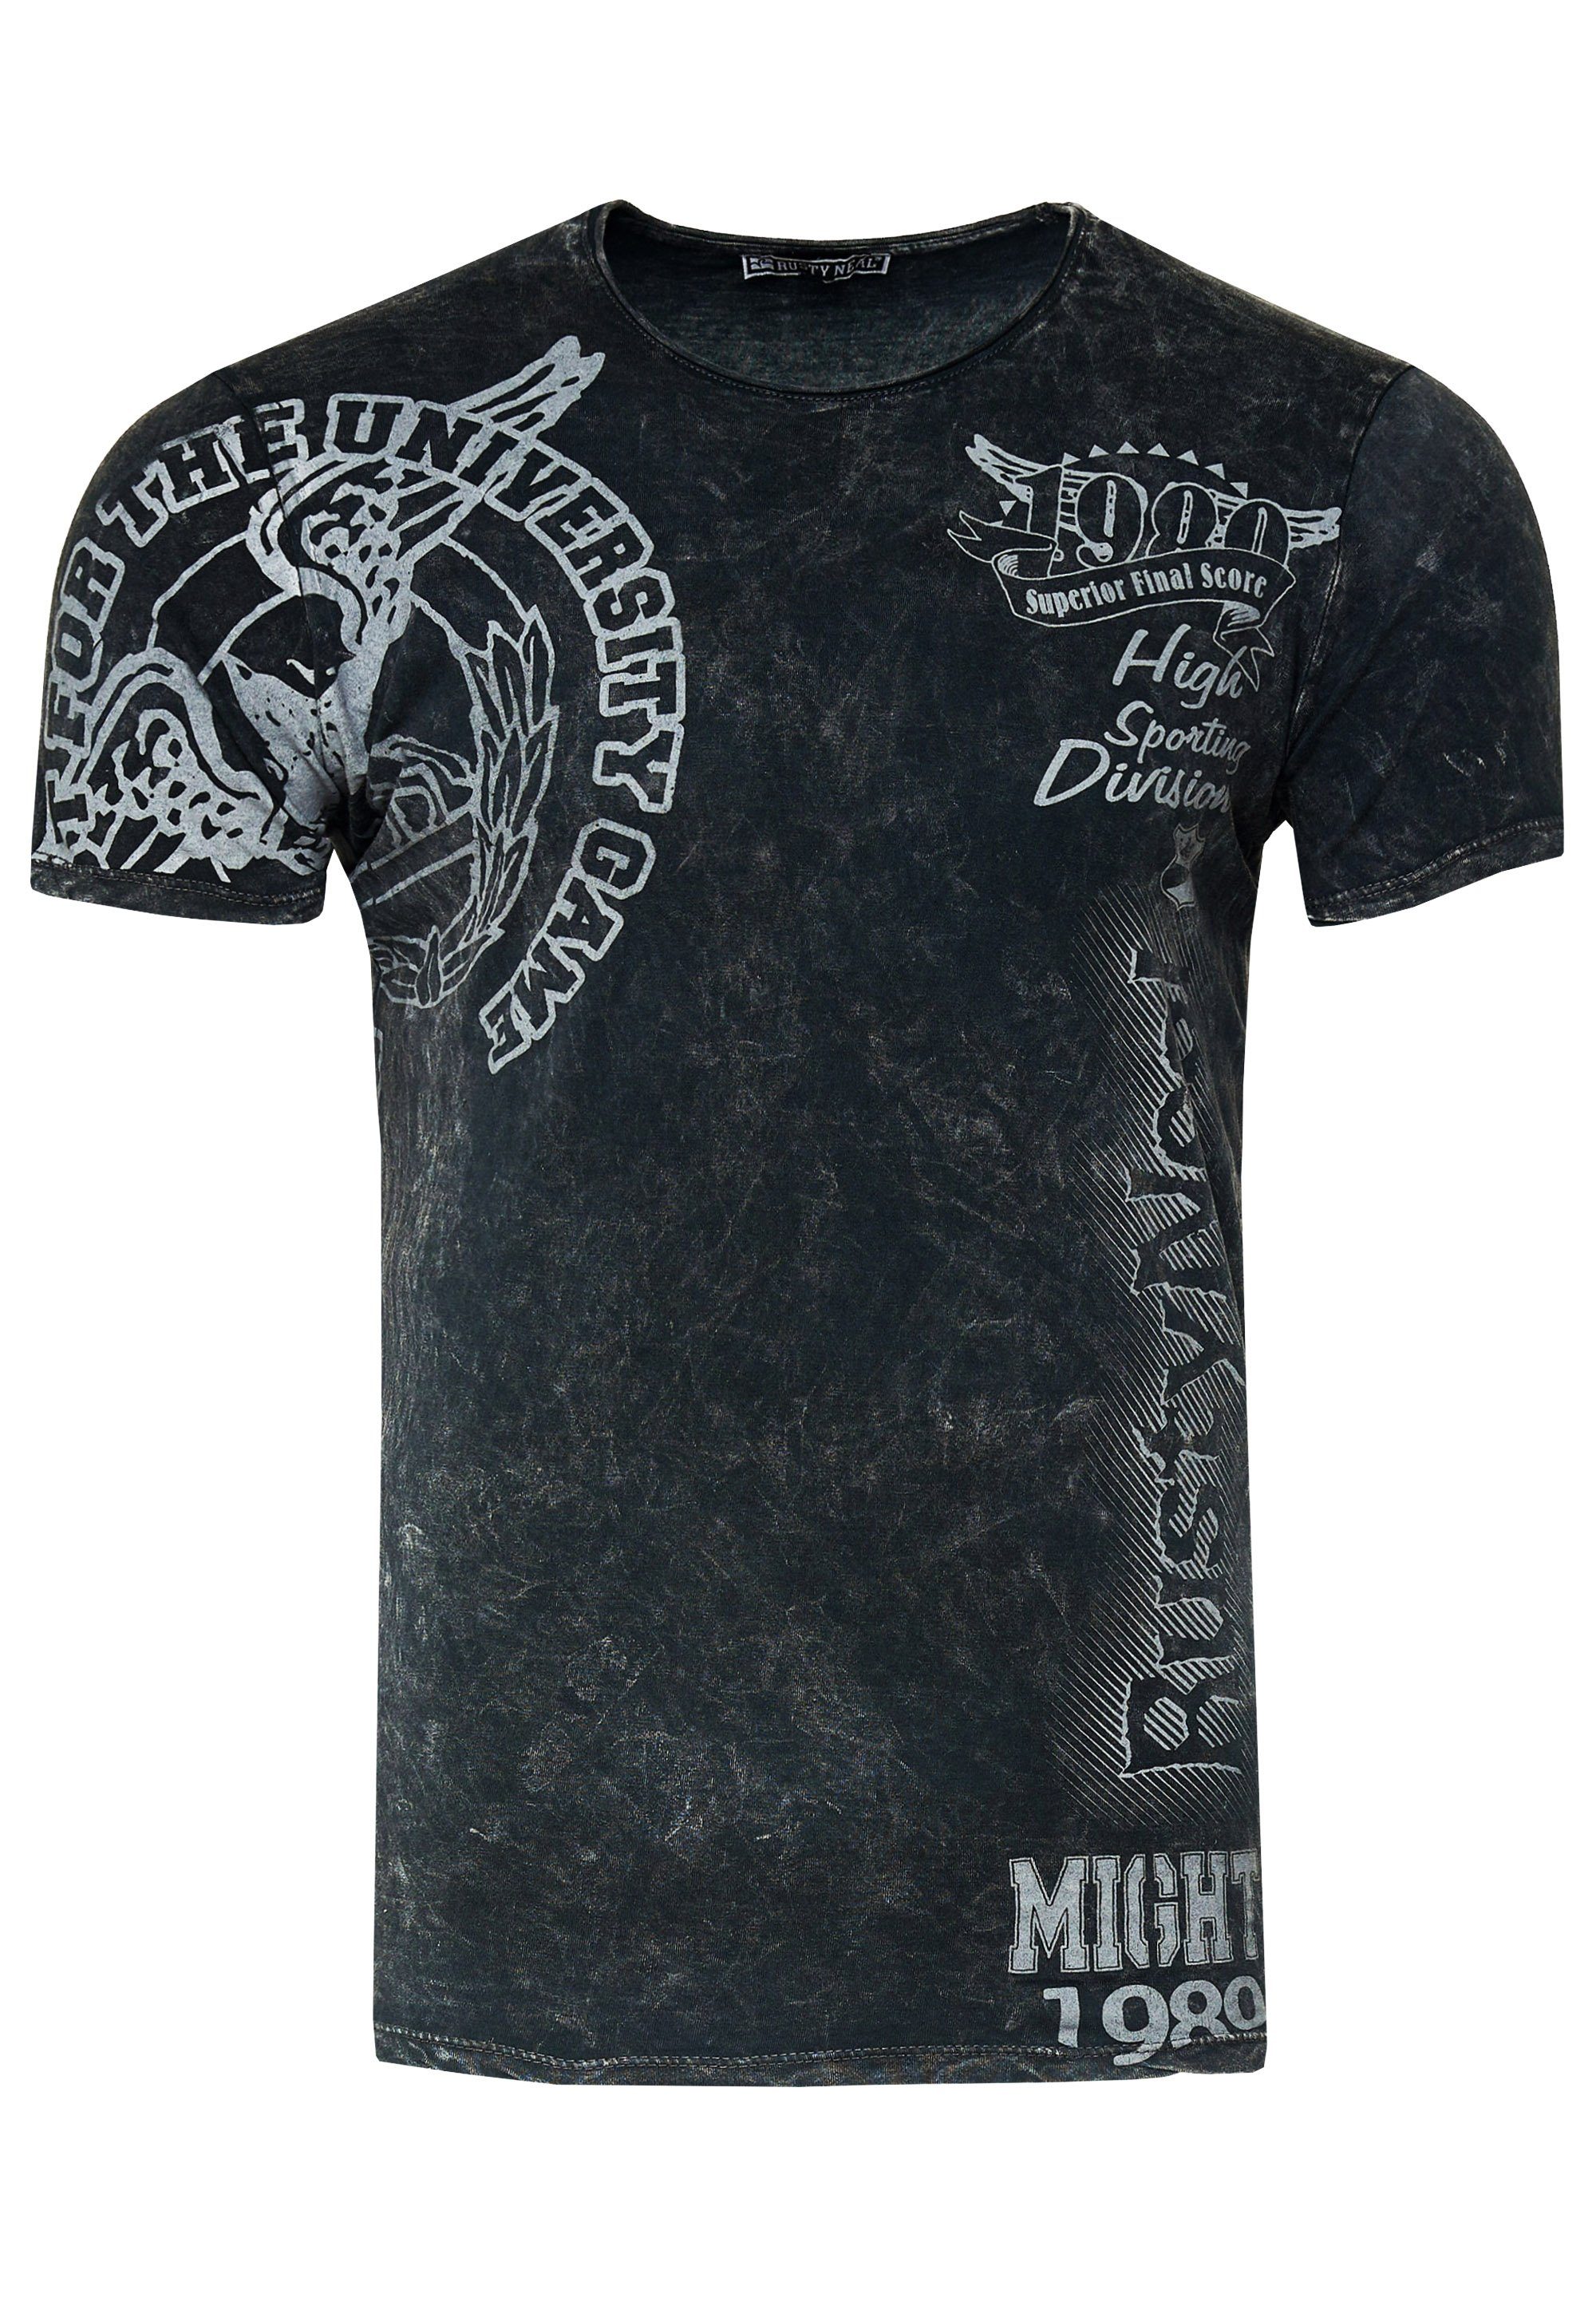 Rusty Neal T-Shirt anthrazit mit eindrucksvollem Print